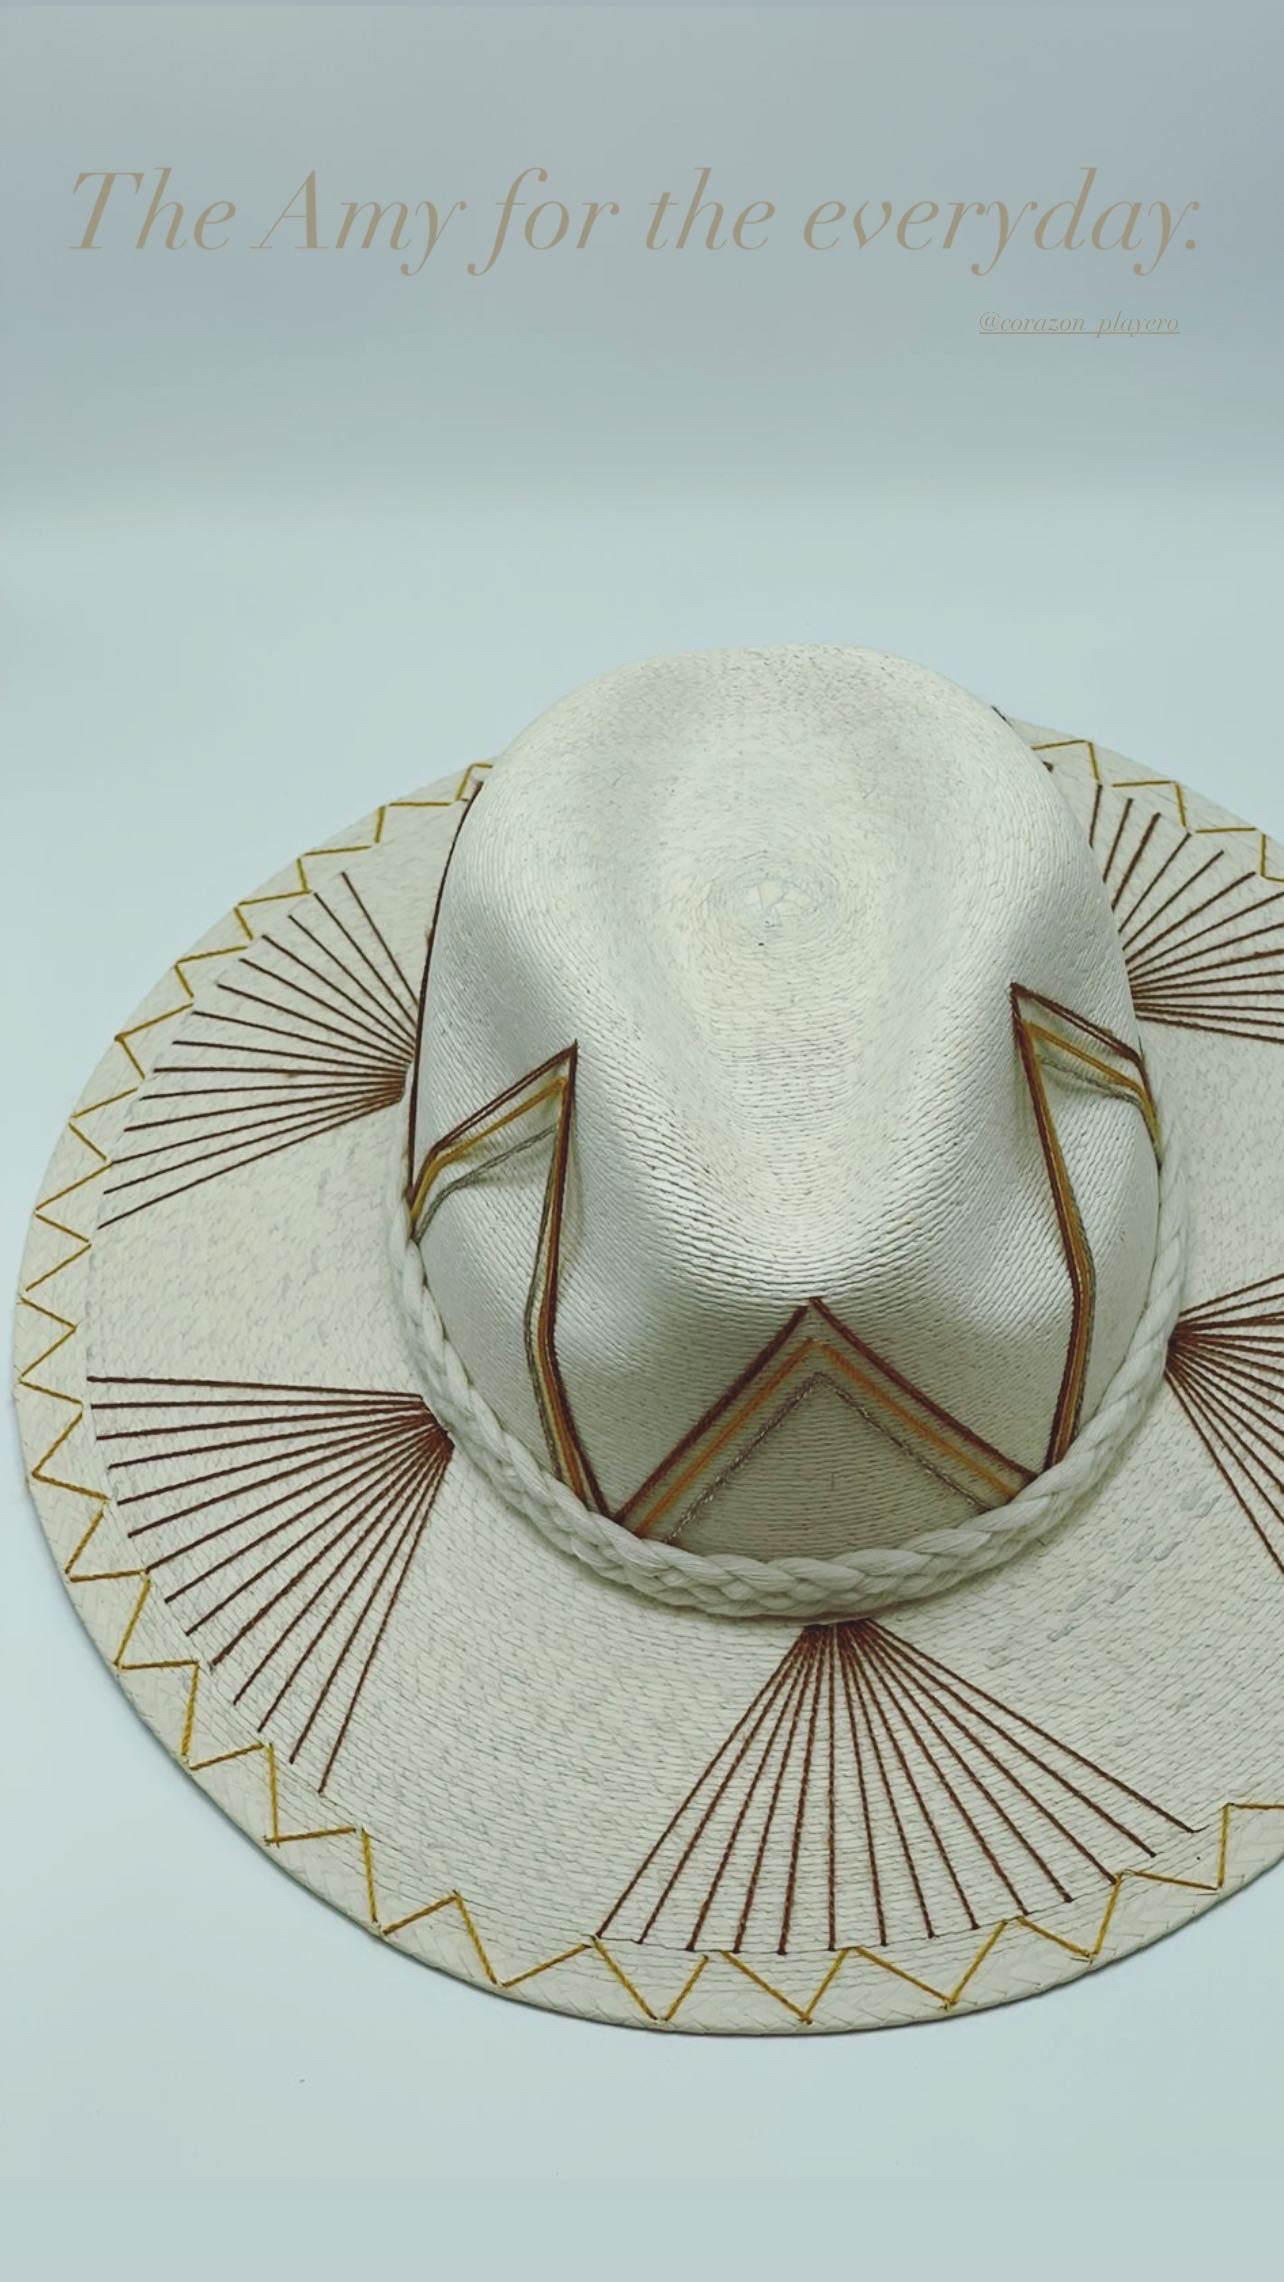 Exclusive Amy Hat by Corazon Playero - Preorder